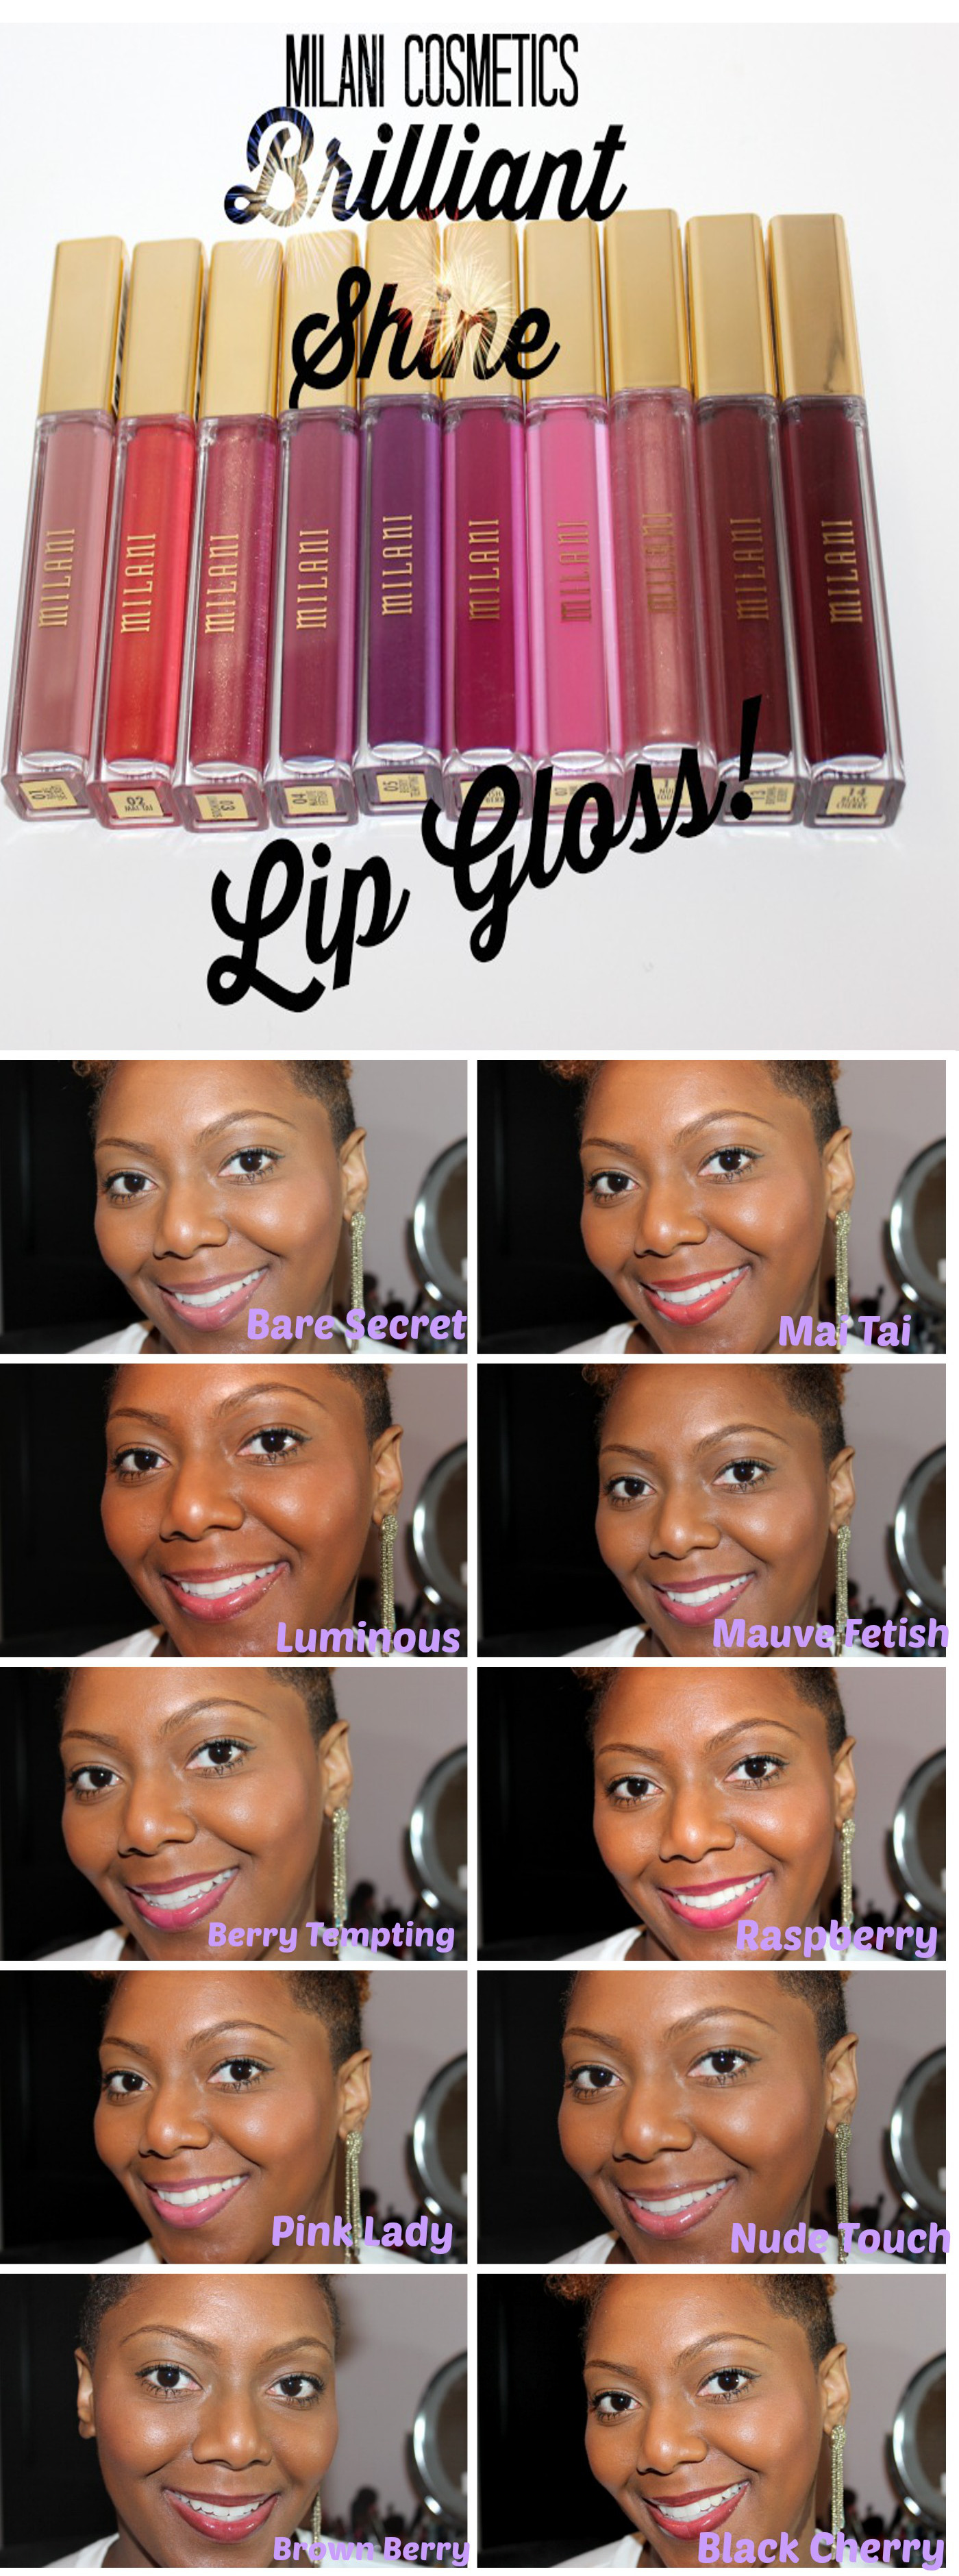 Milani Brilliant Shine Lip Gloss May Just Give You Super Powers!